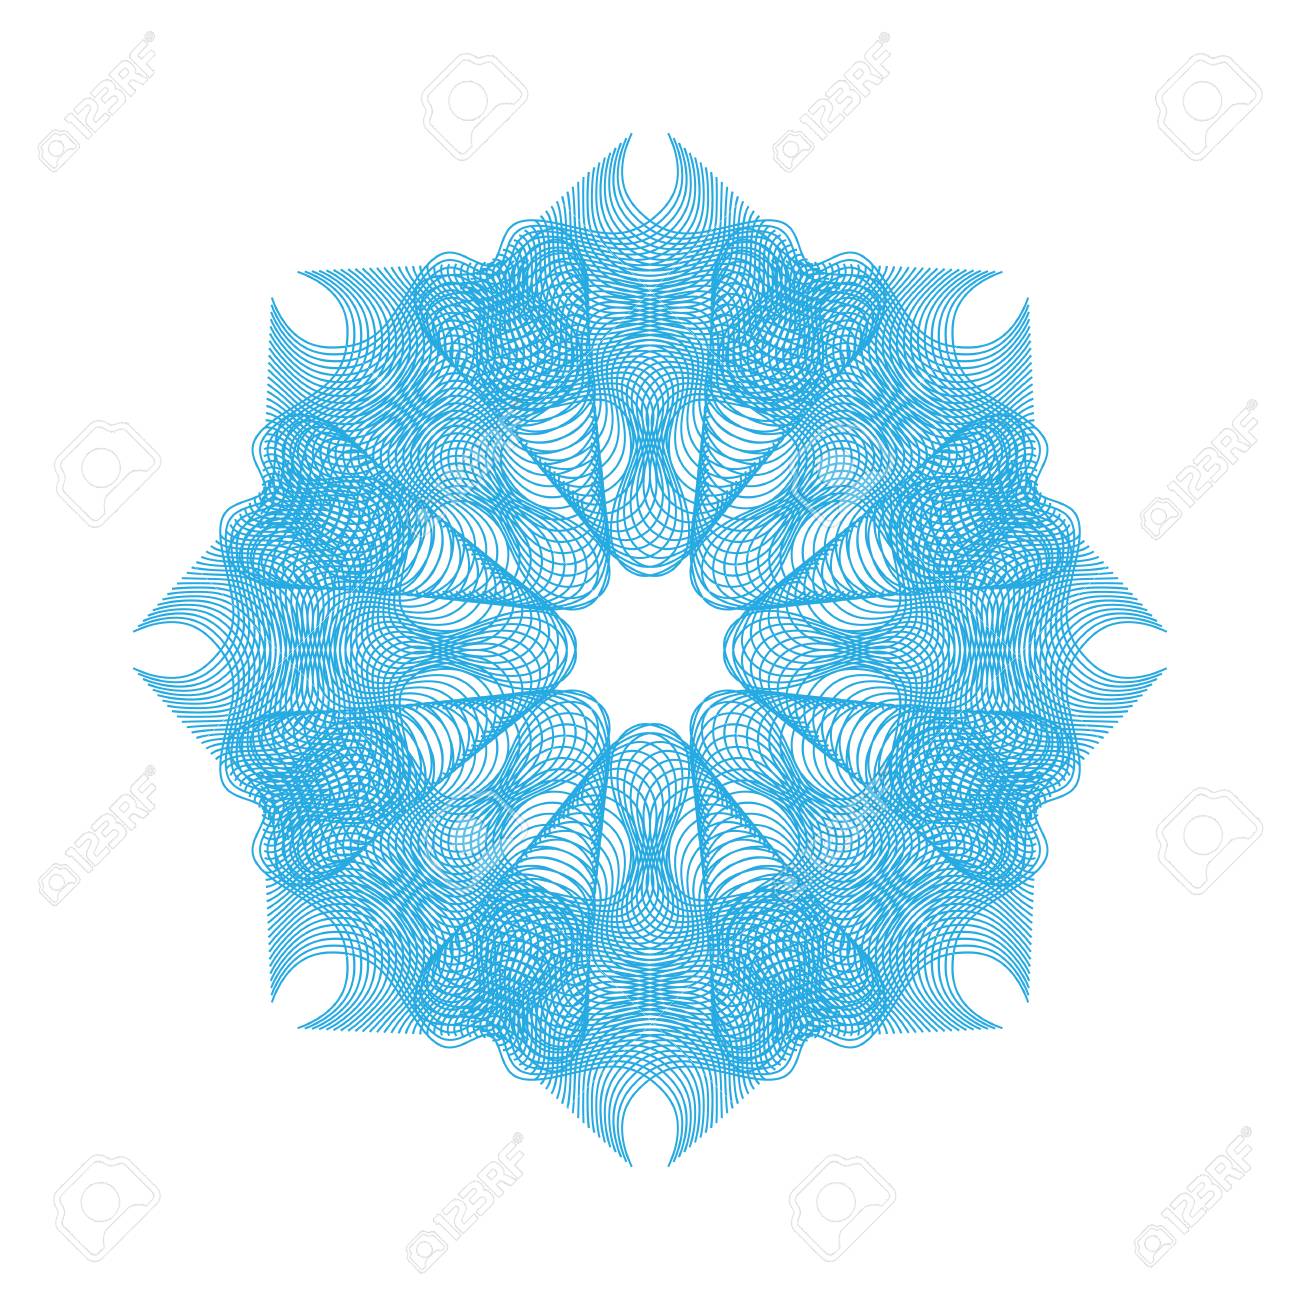 Blue Guilloche Rosette Or Spirograph Background Vector